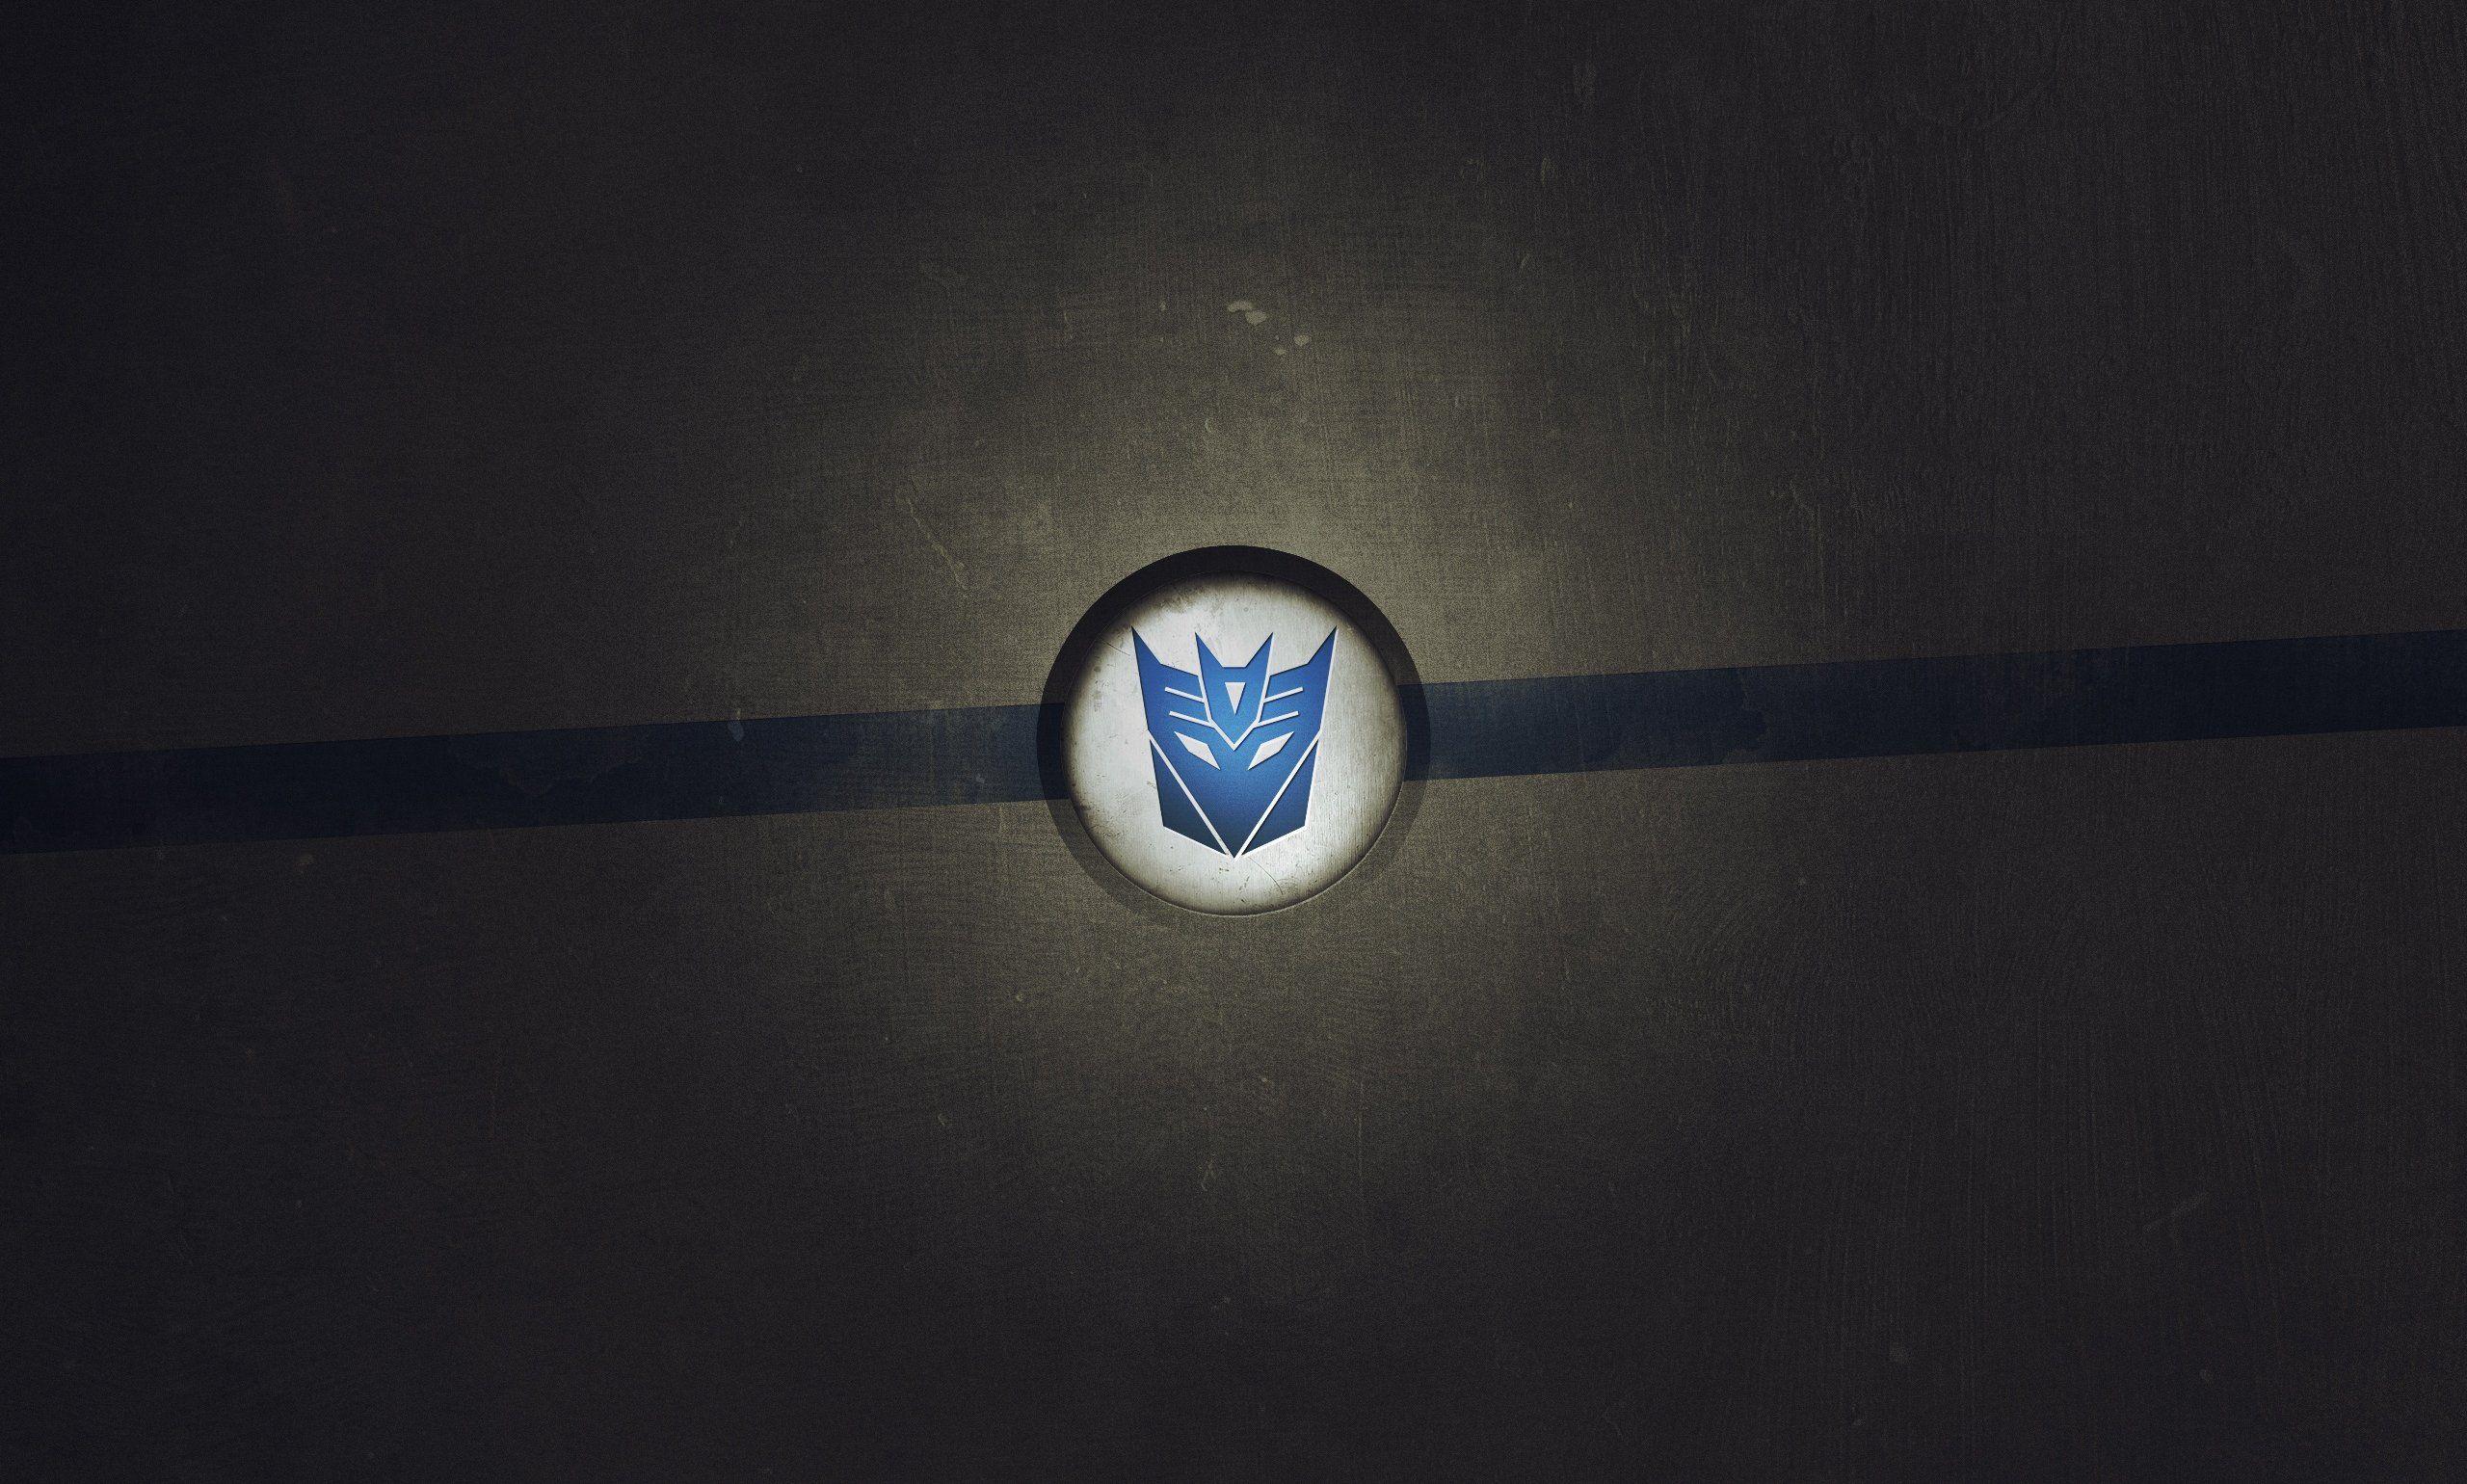 Transformers Decepticons Logo